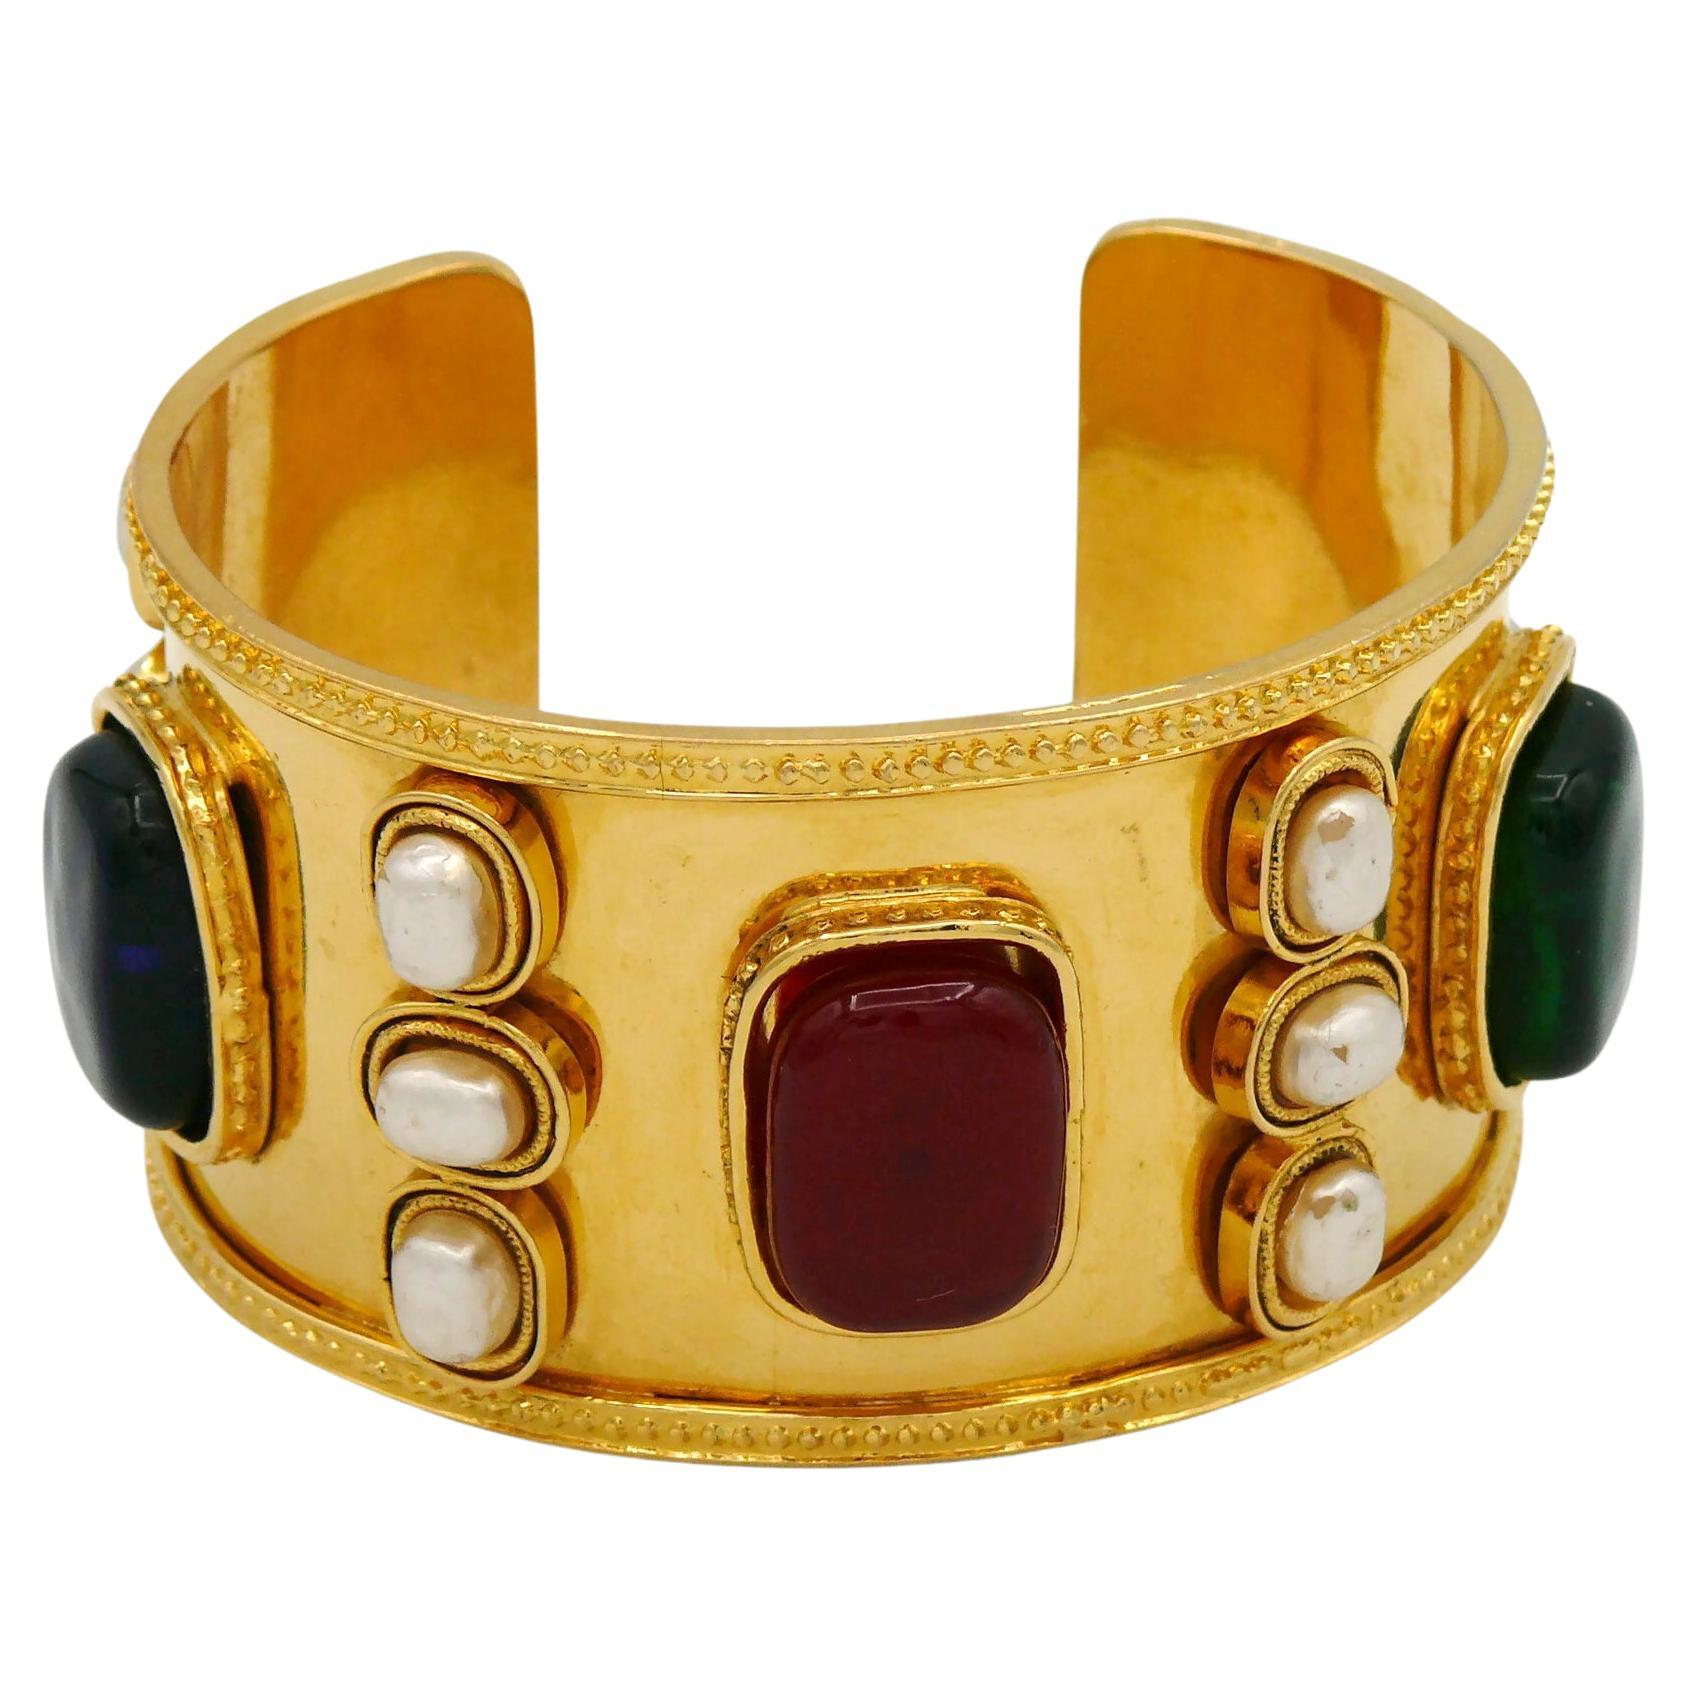 chanel bangle bracelet gold